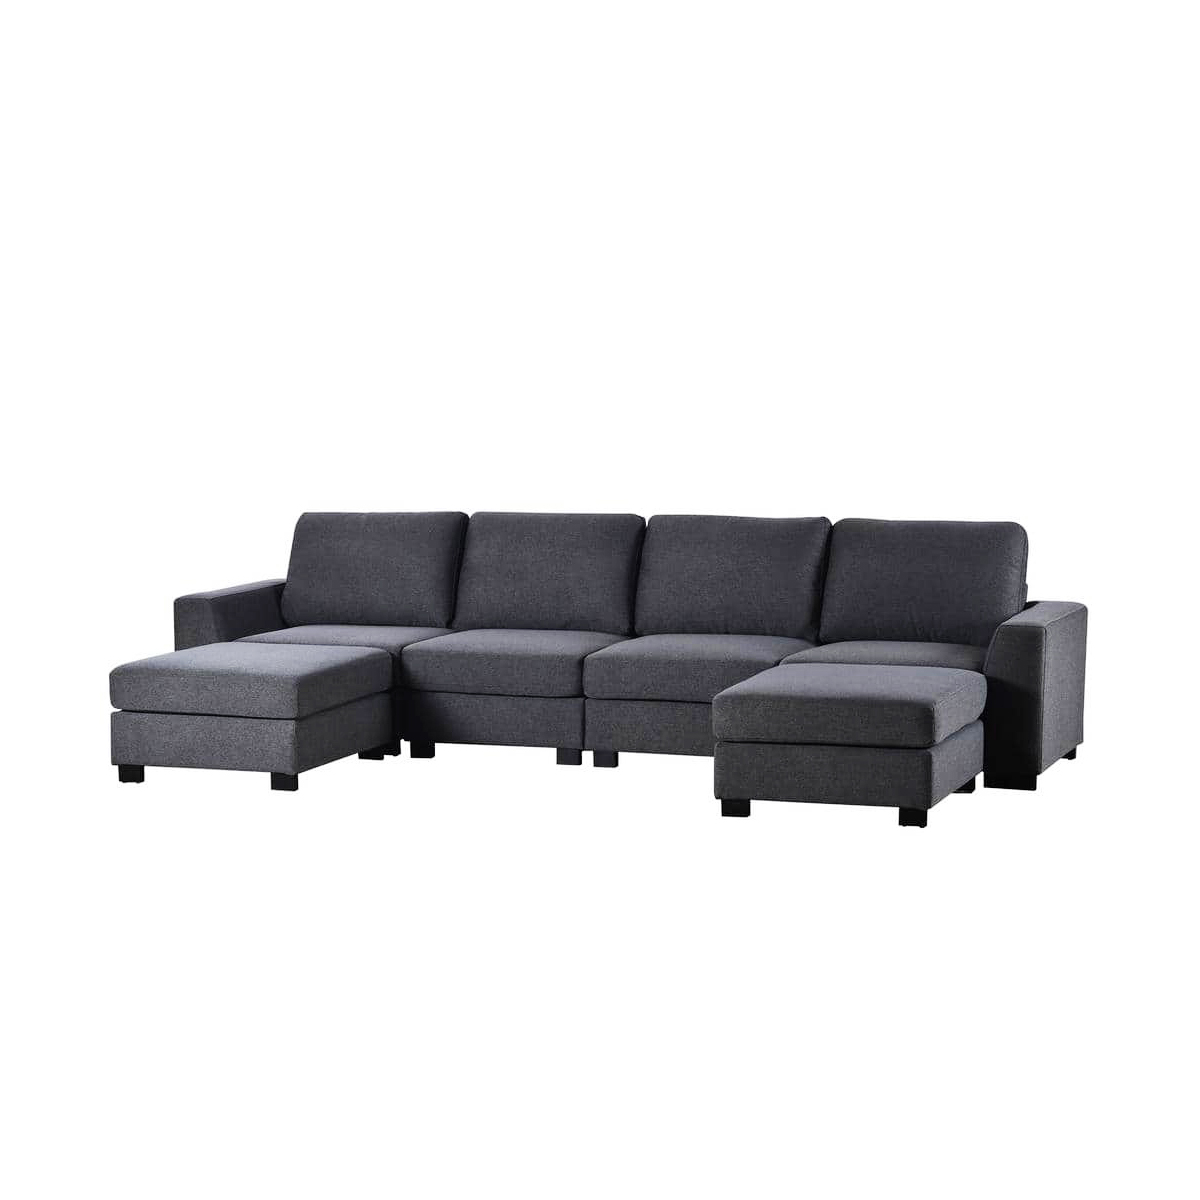 gray-harper-bright-designs-sectional-sofas-wyt104aae-4f_1000.jpg